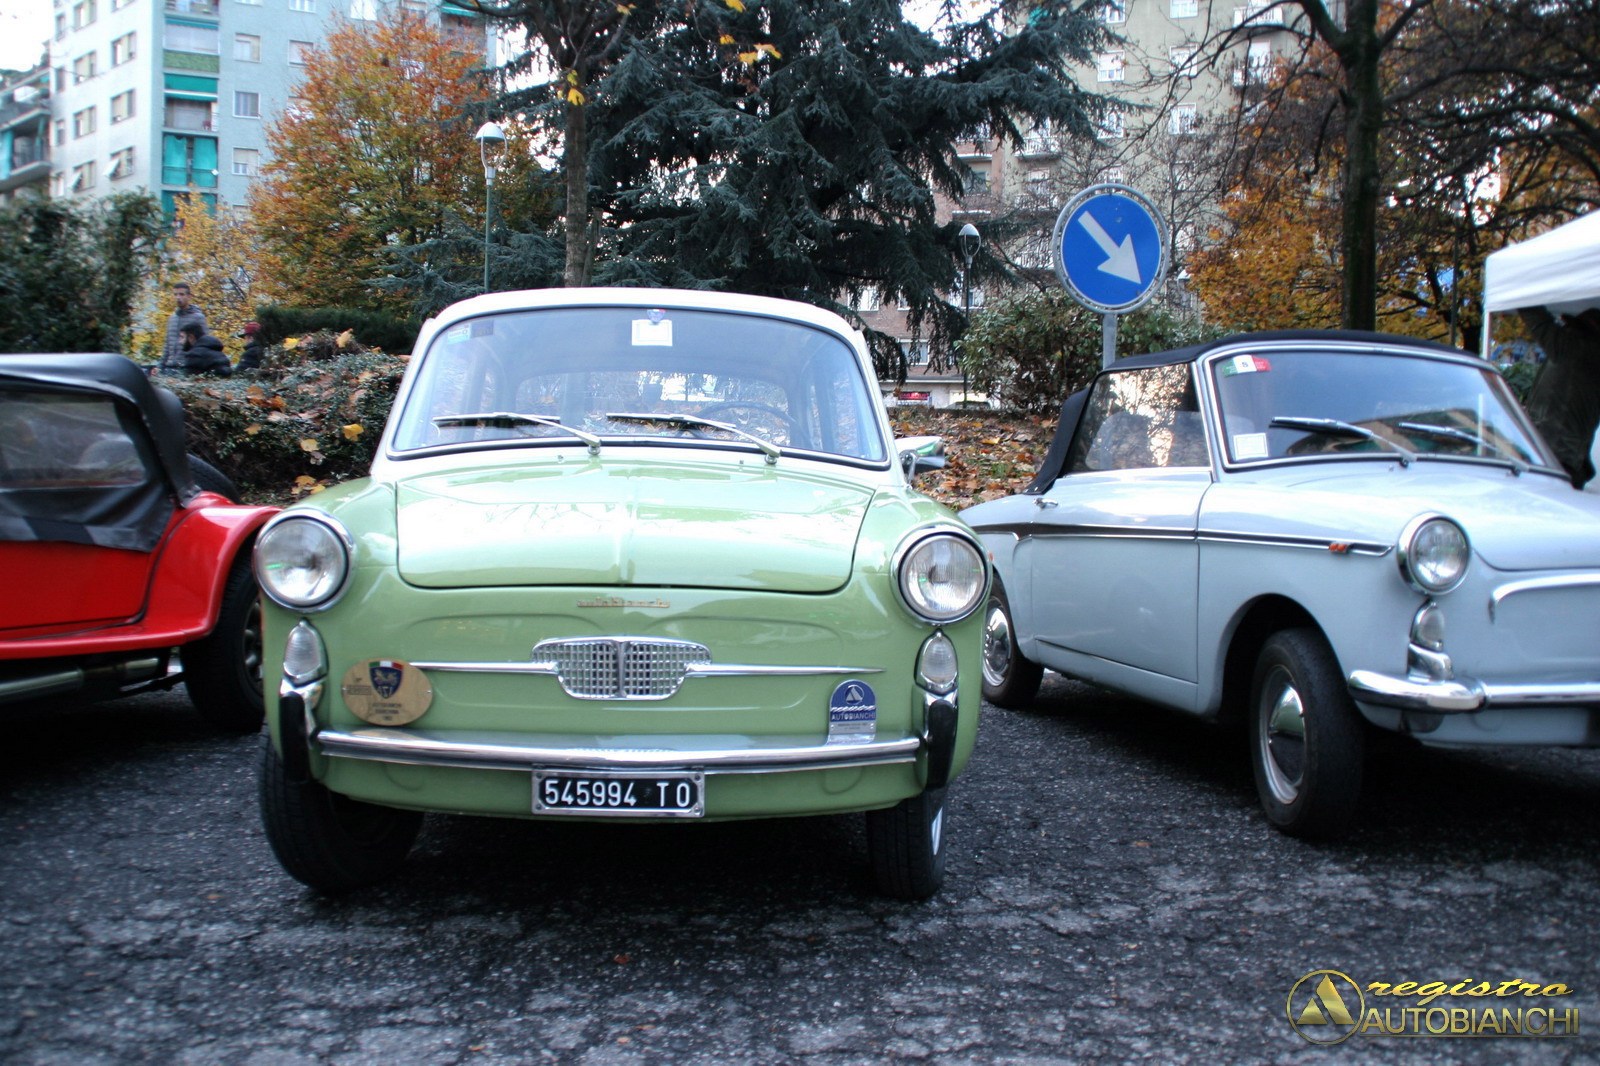 2014-11-16_Torino-piazza-Respighi_025